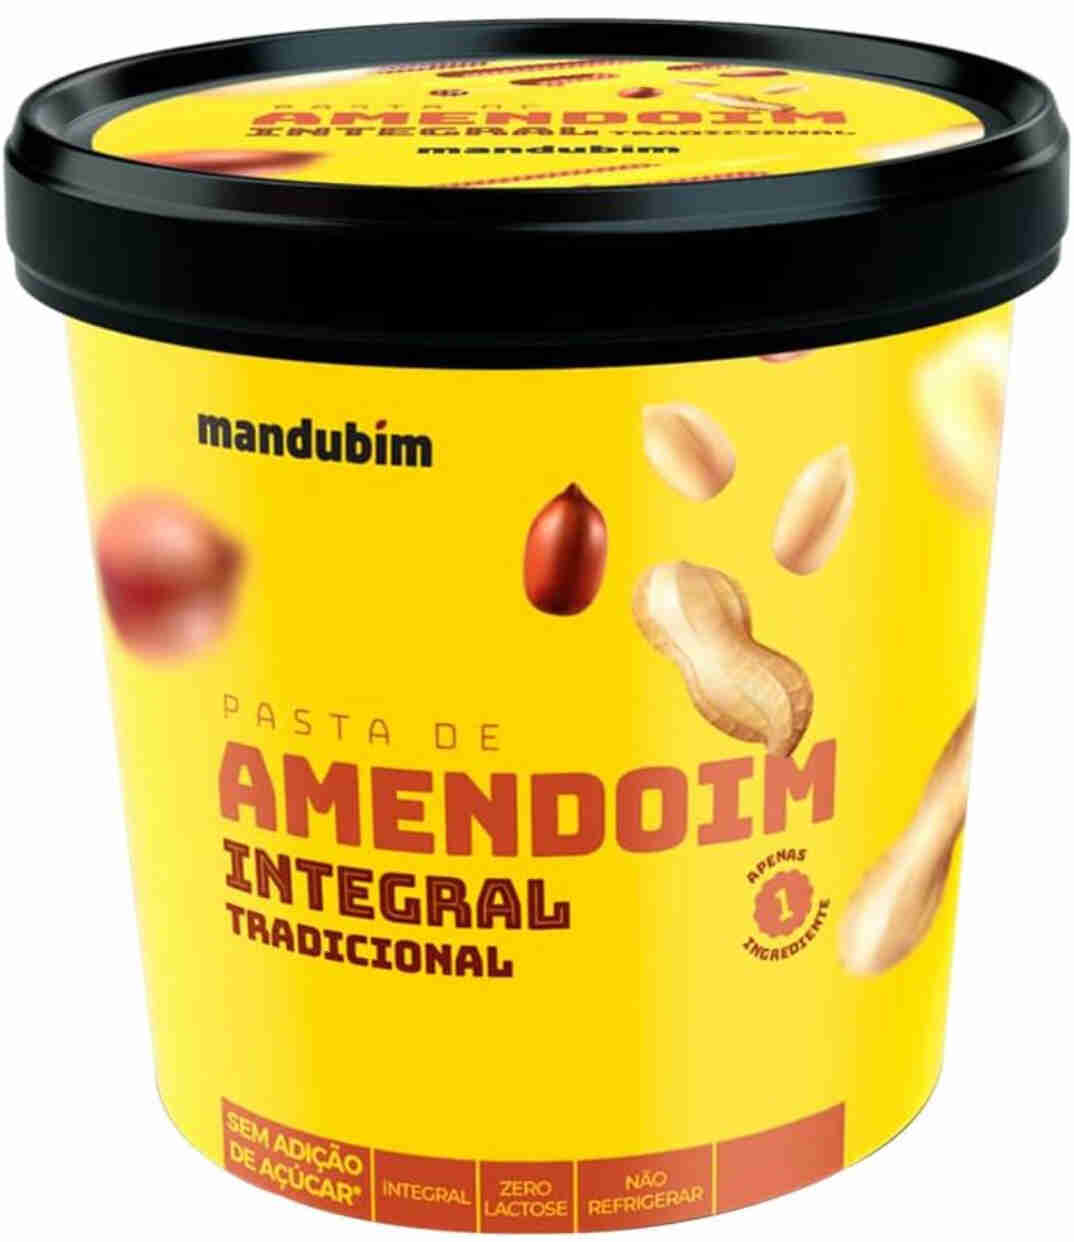 Mandubim Pasta de Amendoim sabor integral tradicional, 1kg